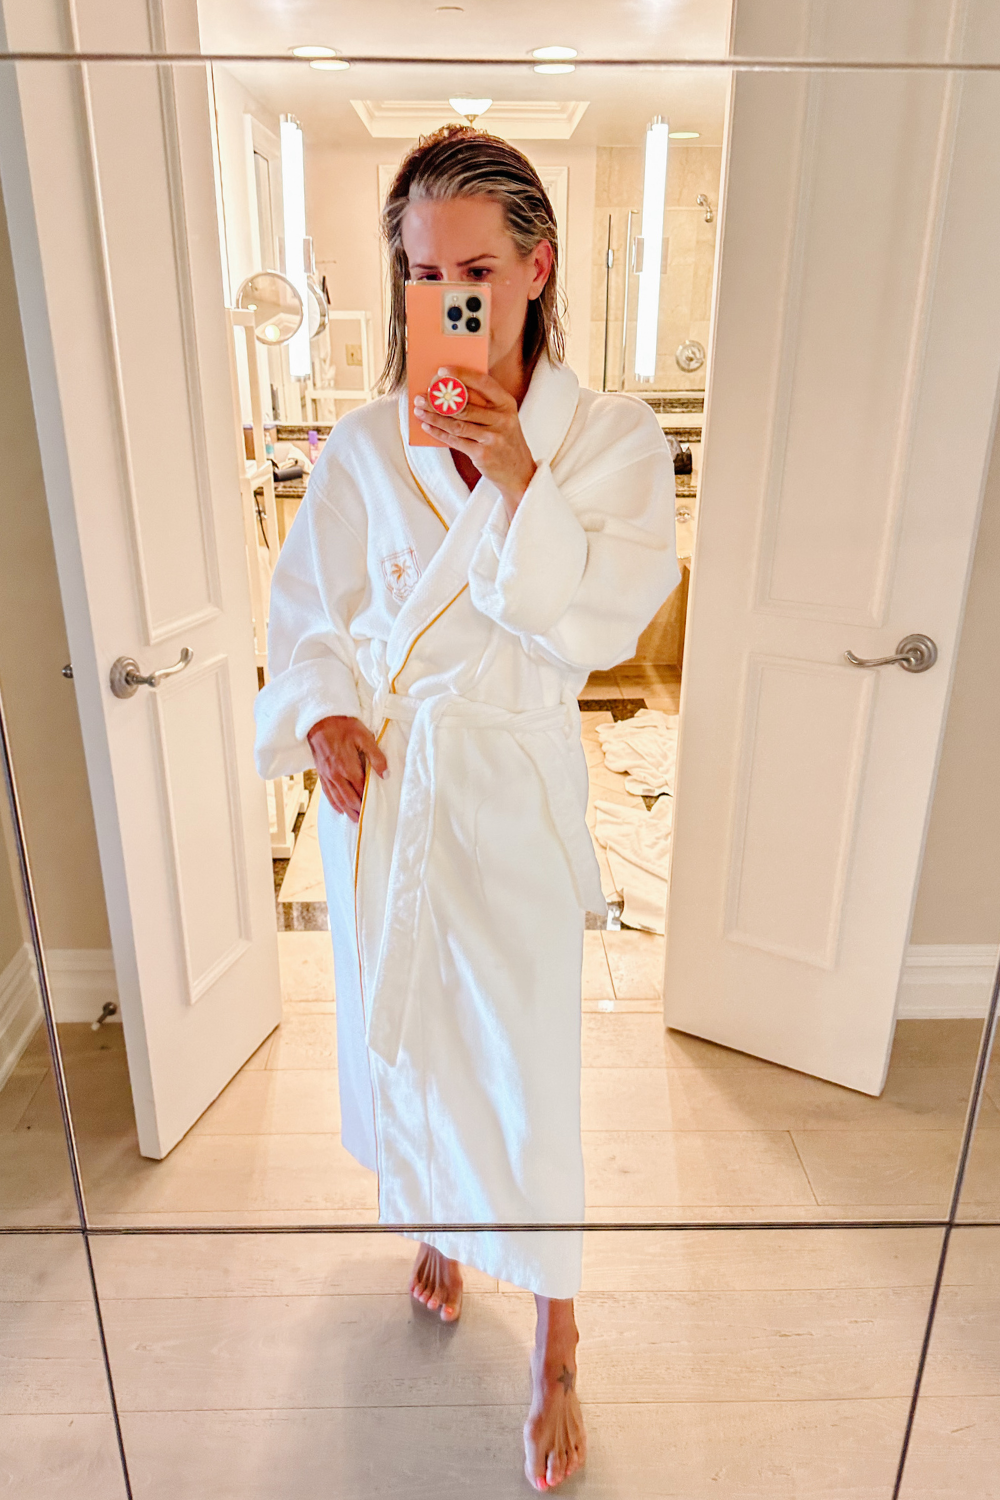 Suzanne in a white hotel robe at The Boca Raton 